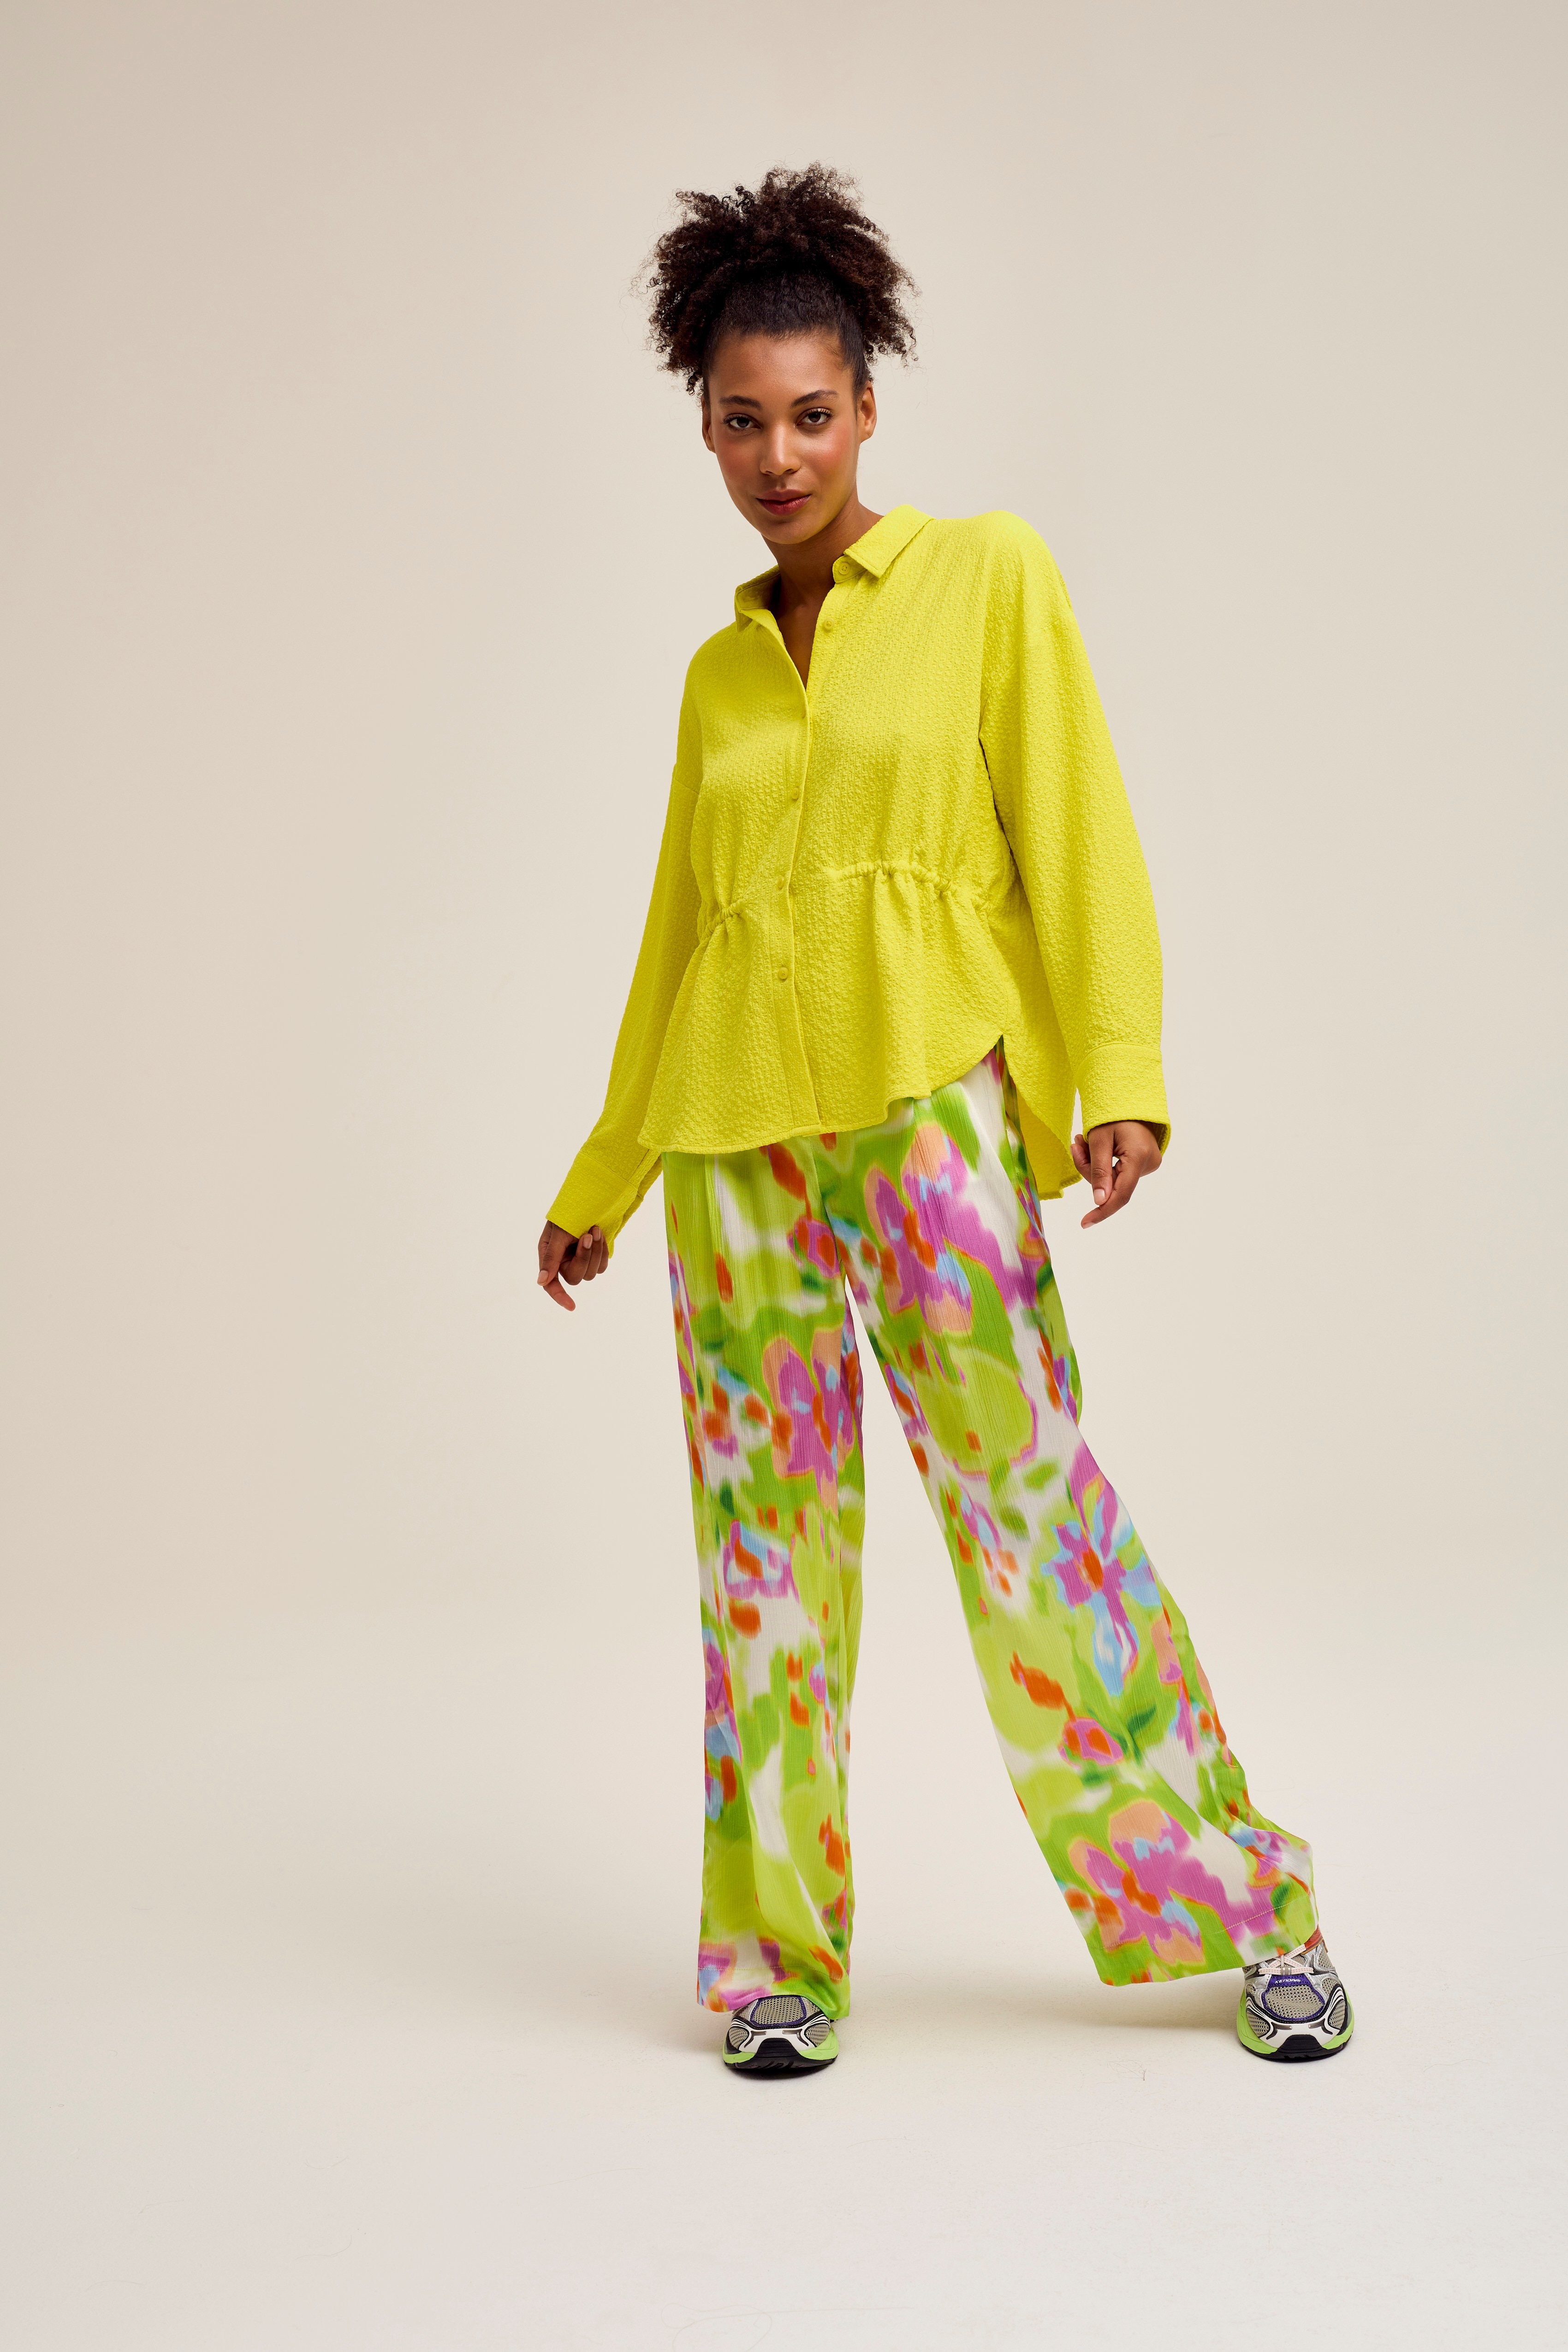 CKS Dames - SWIPE - blouse short sleeves - bright yellow